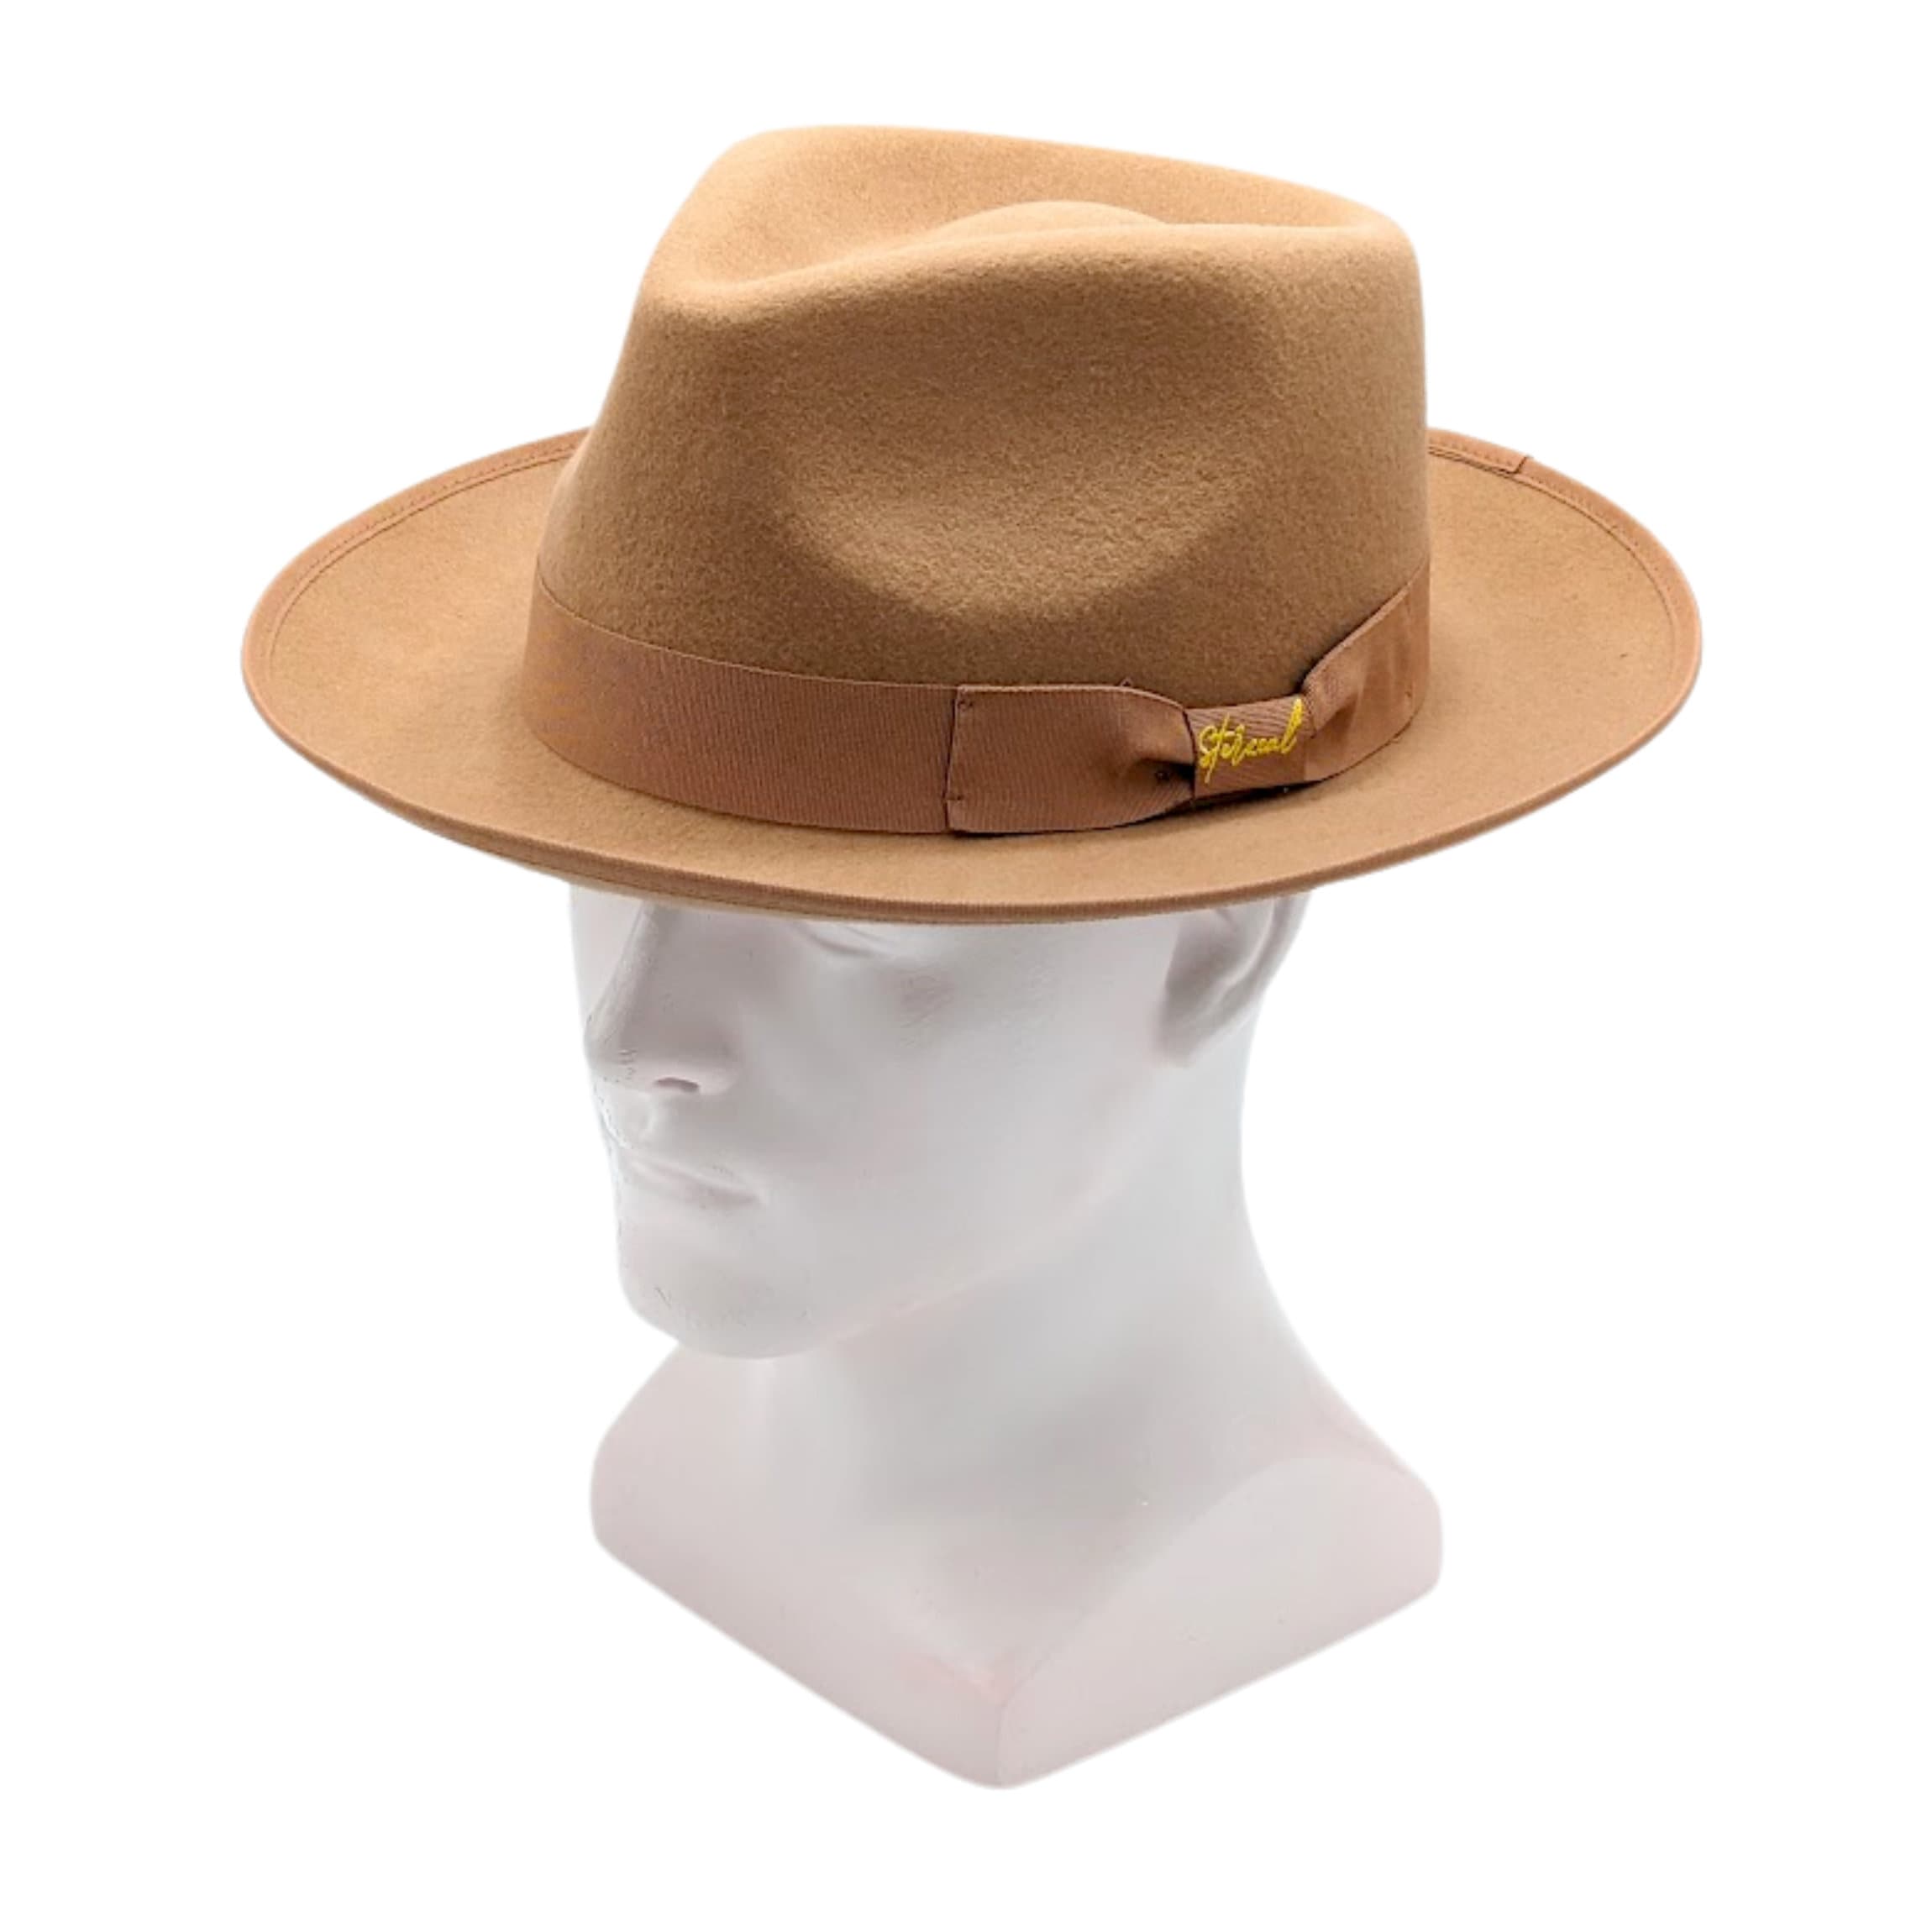 Sterzeal Classic Fedora Hat